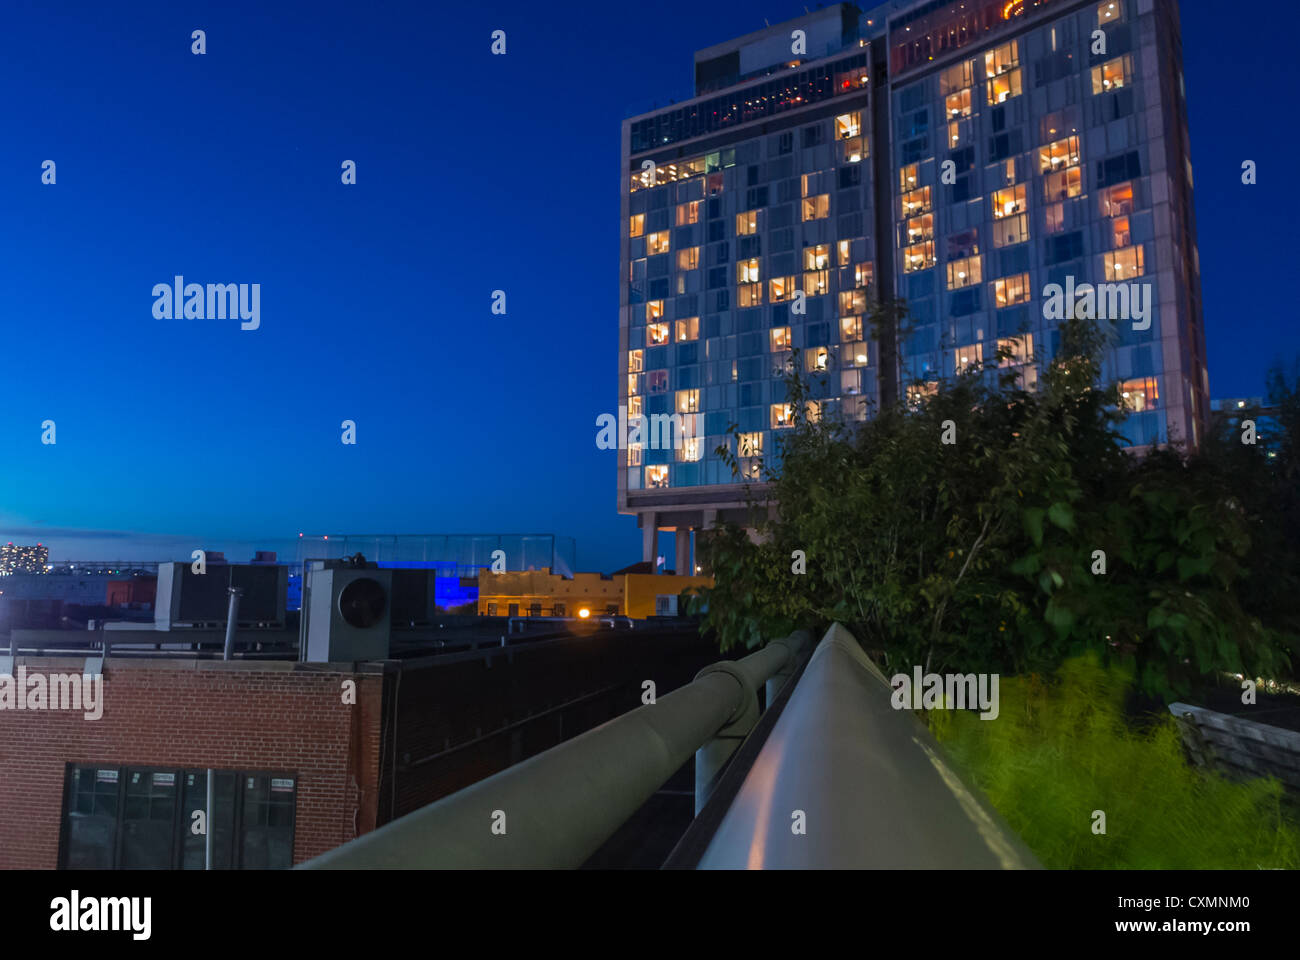 New York, NY, USA, Street Scenes, 'The Standard Hotel' sur le High Line Garden, dans le Meatpacking District , nuit Banque D'Images